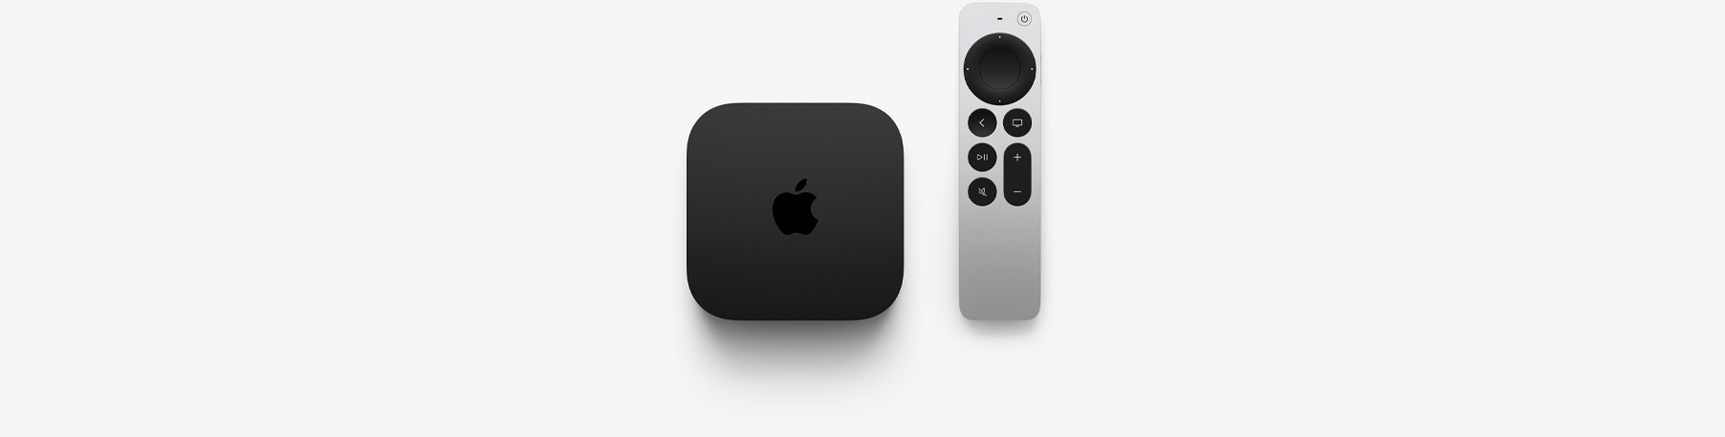 Apple TV 4K와 Siri Remote가 나란히 놓여 있는 모습